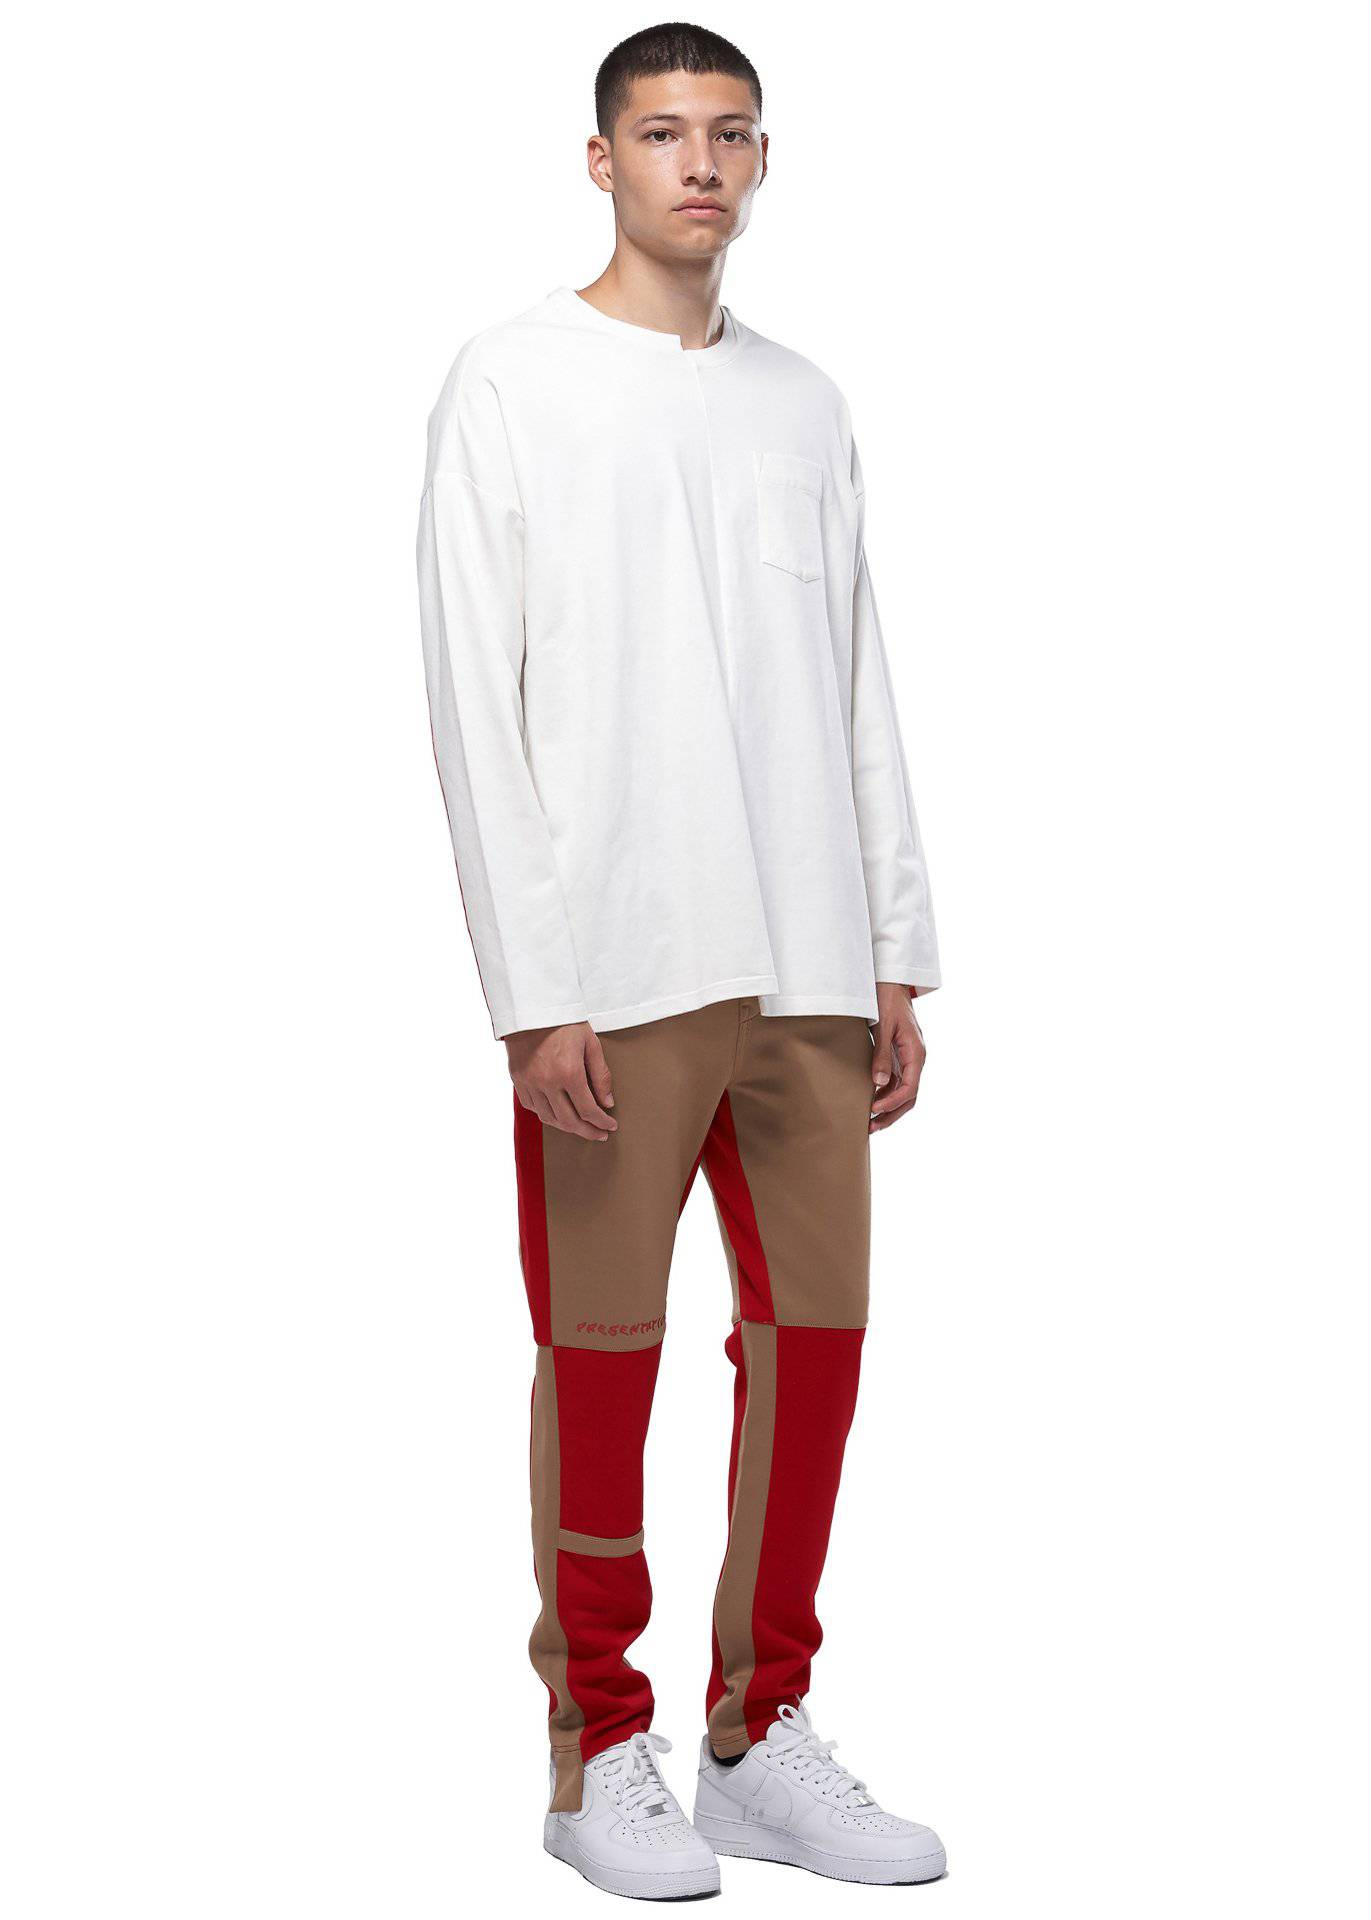 Konus Men's Unbalanced Hem Long Sleeve Tee in White by Shop at Konus